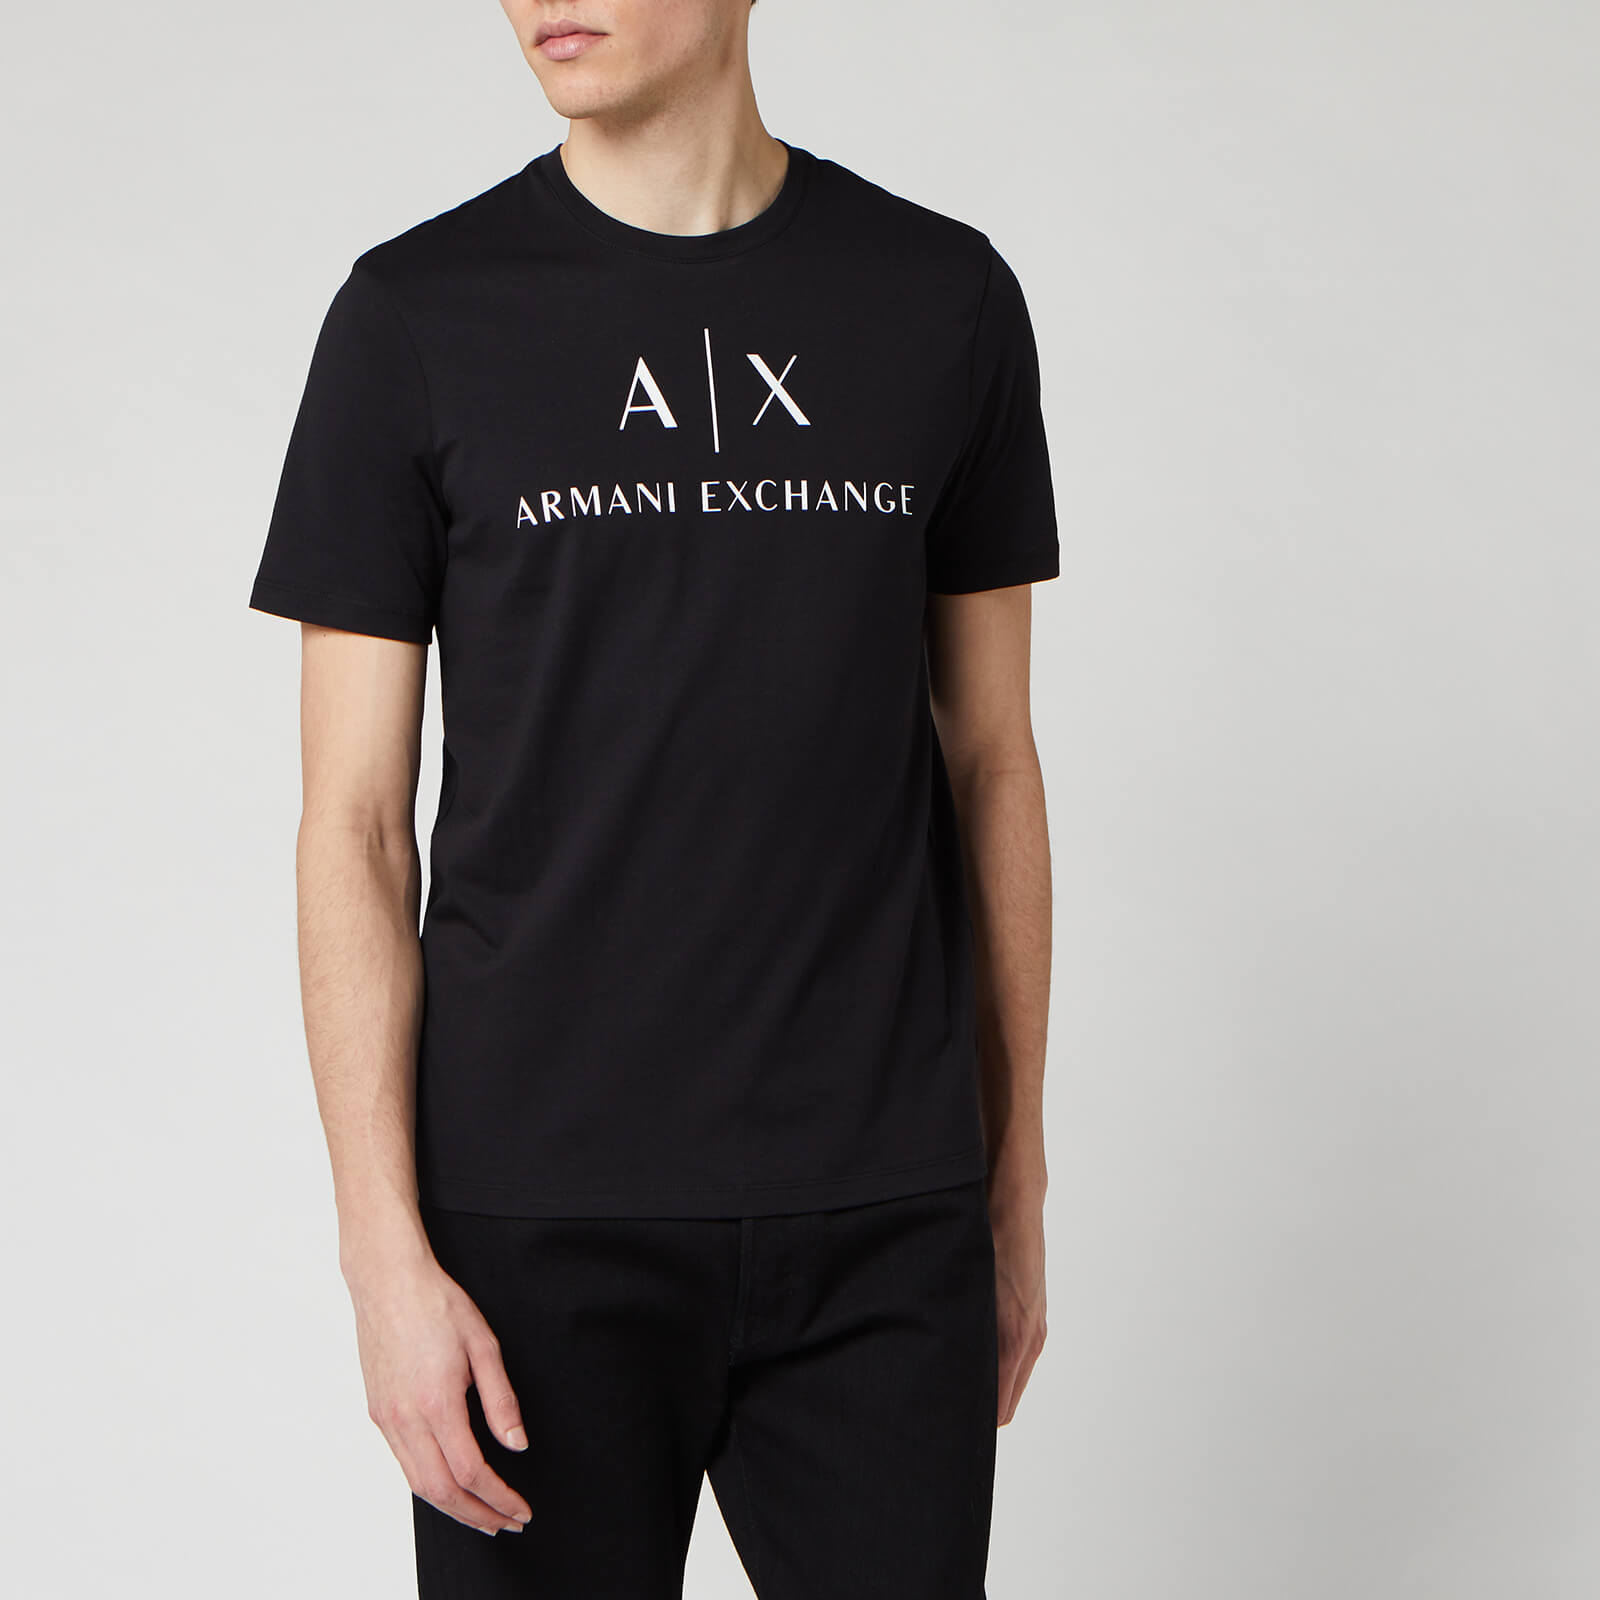 armani exchange mens shirts on sale